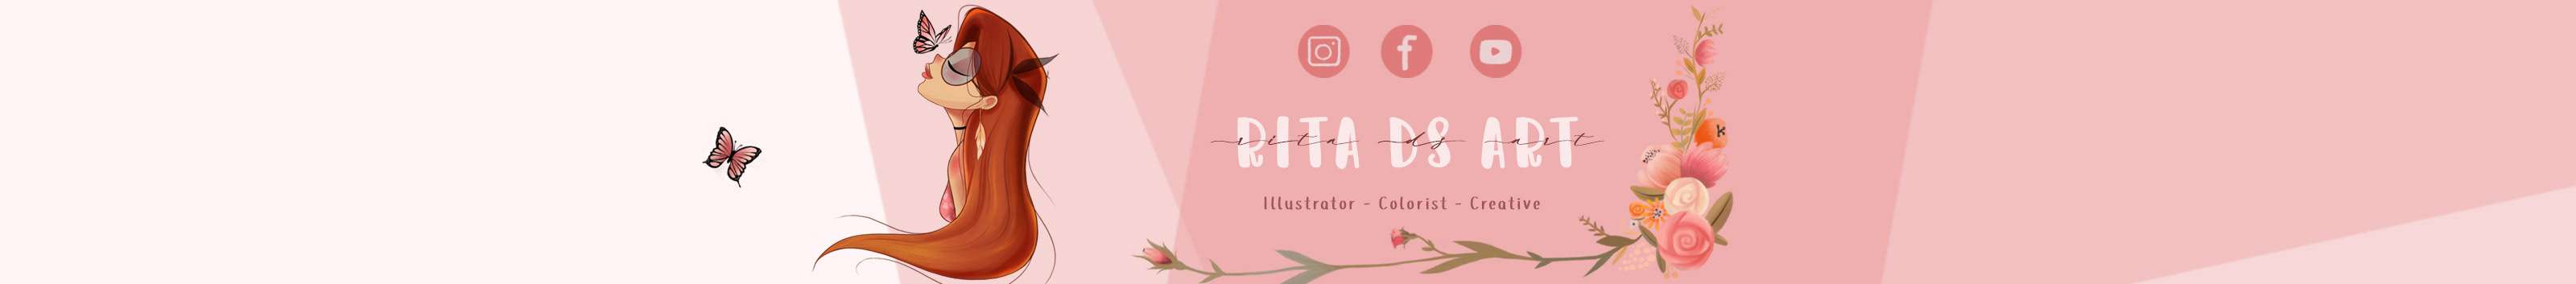 Rita Rosa Del Sorbo's profile banner